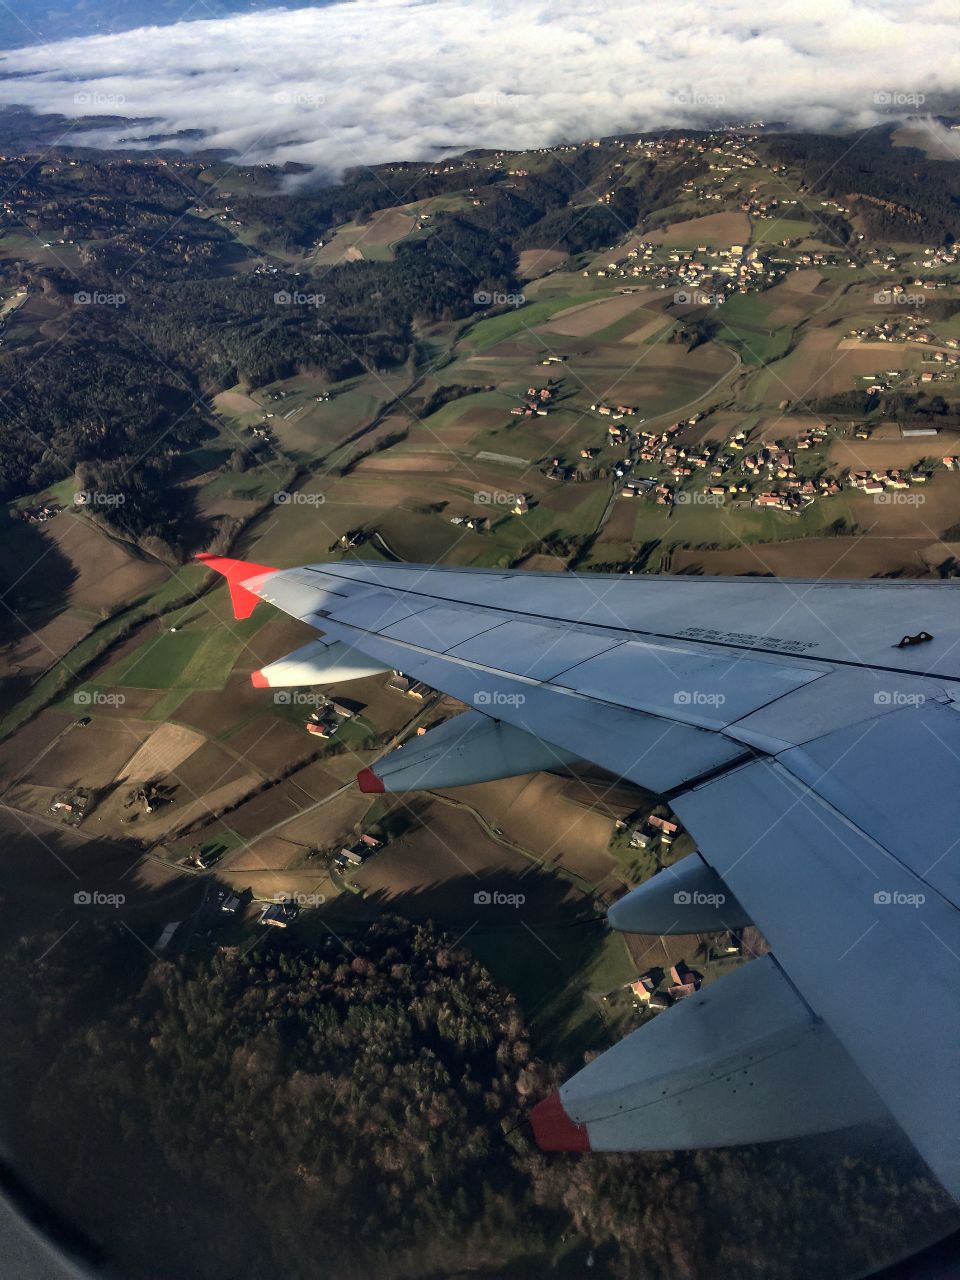 On a way to Frankfurt, flying above Söding-Sankt Joan